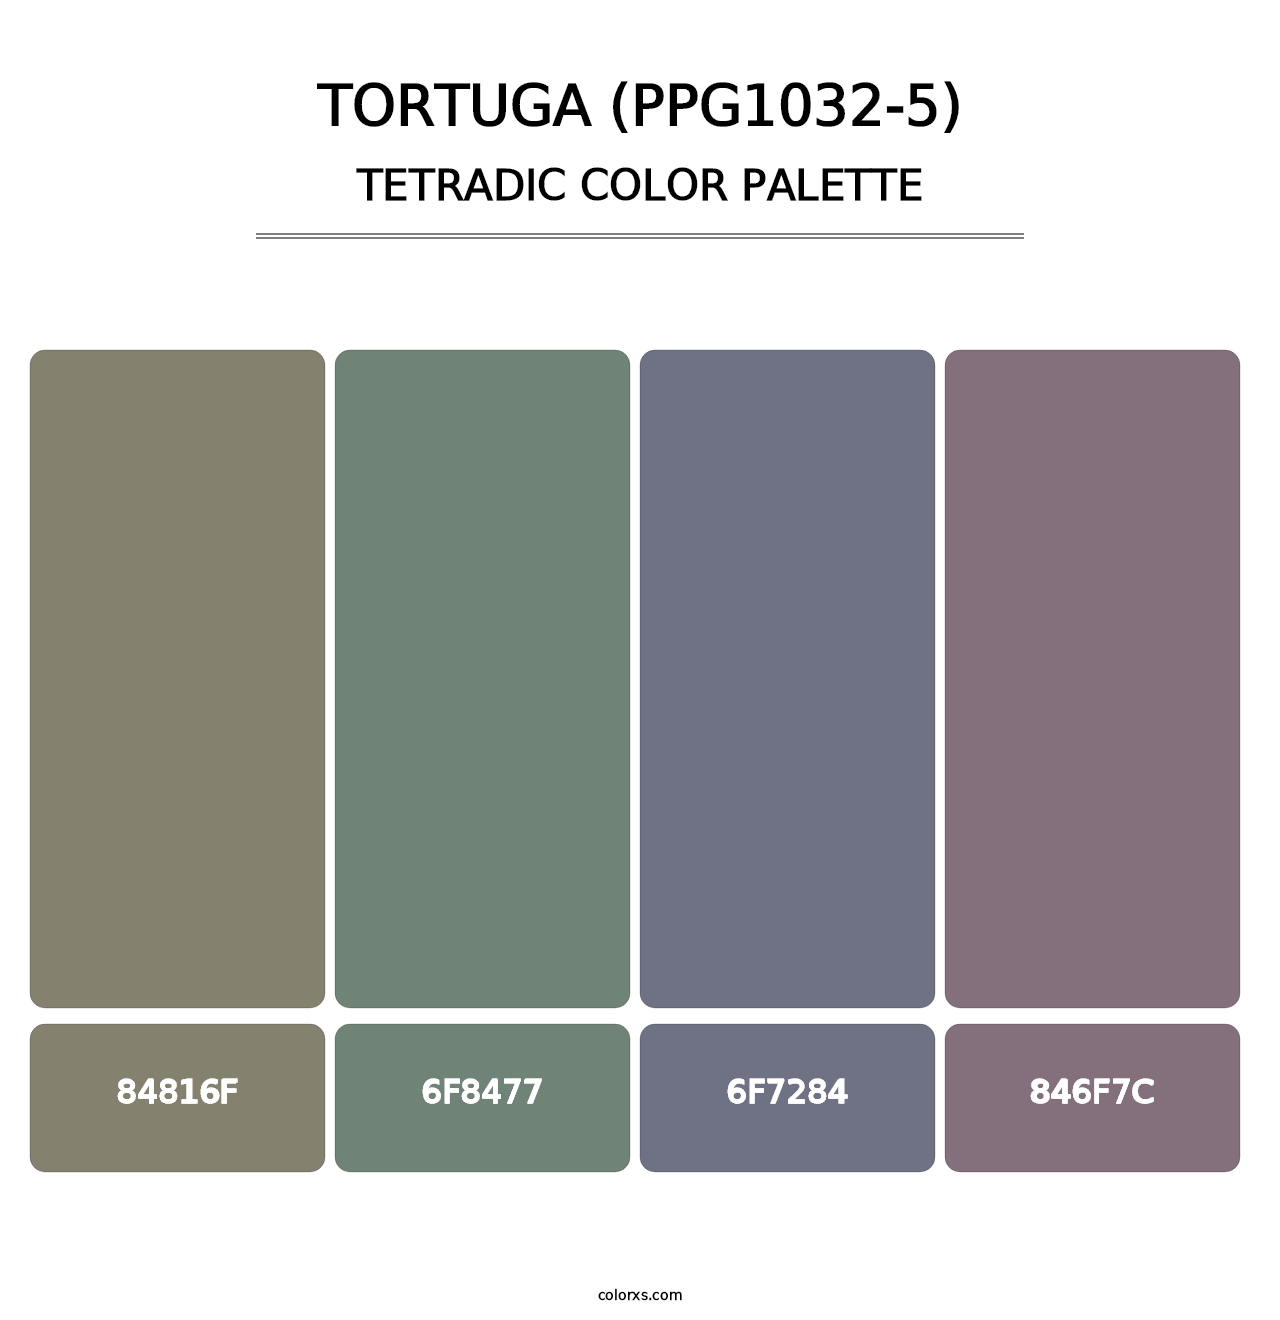 Tortuga (PPG1032-5) - Tetradic Color Palette